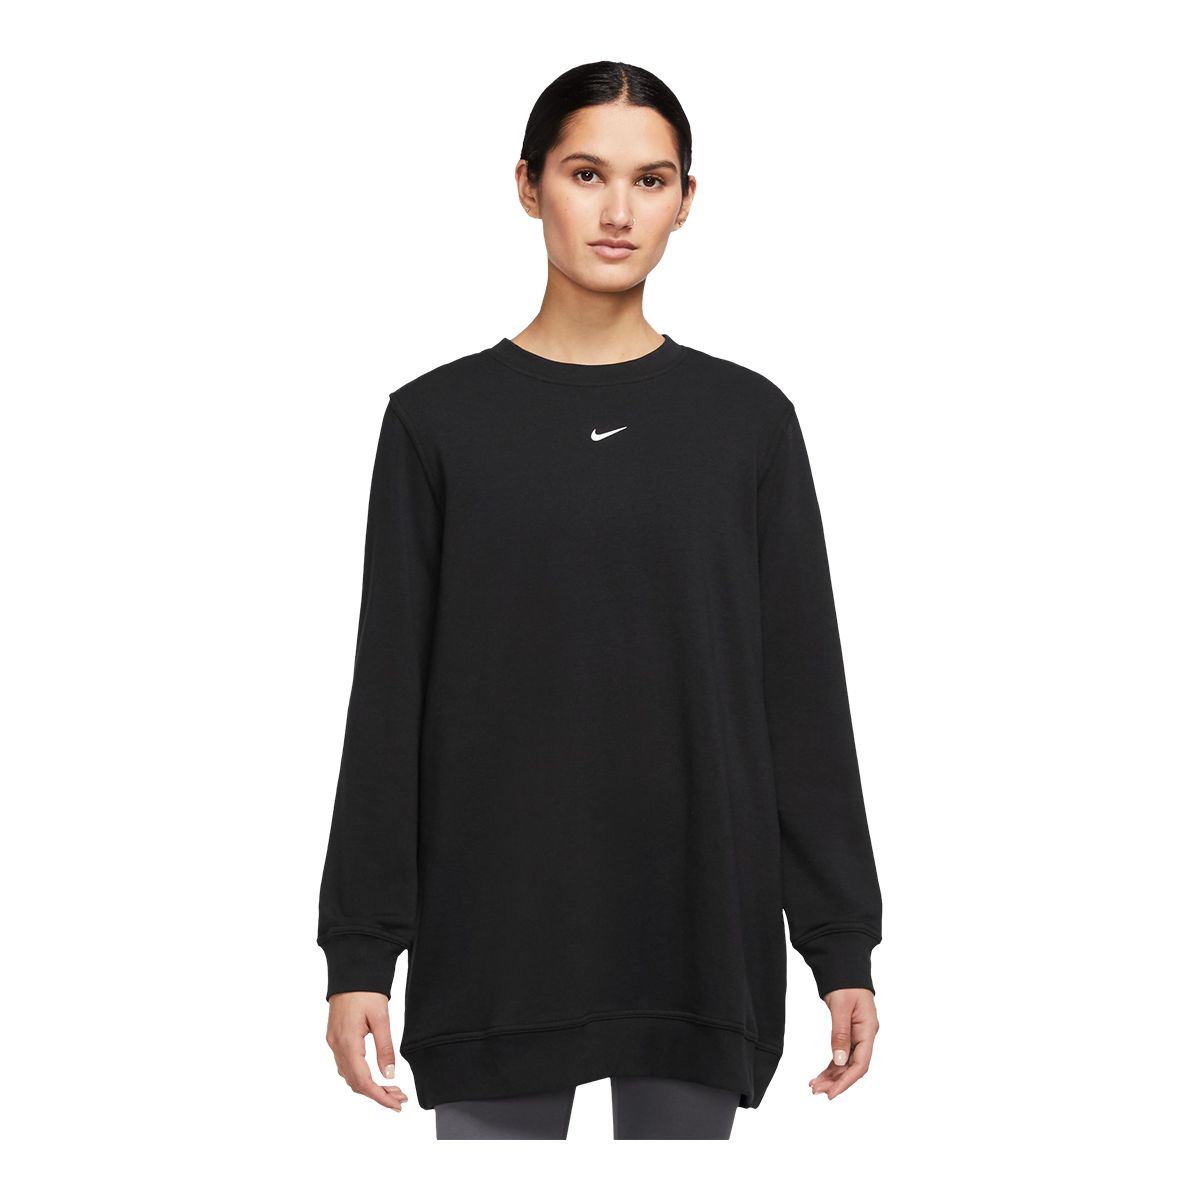 Nike Performance ONE CREW TUNIC - Sweatshirt - black/white/black